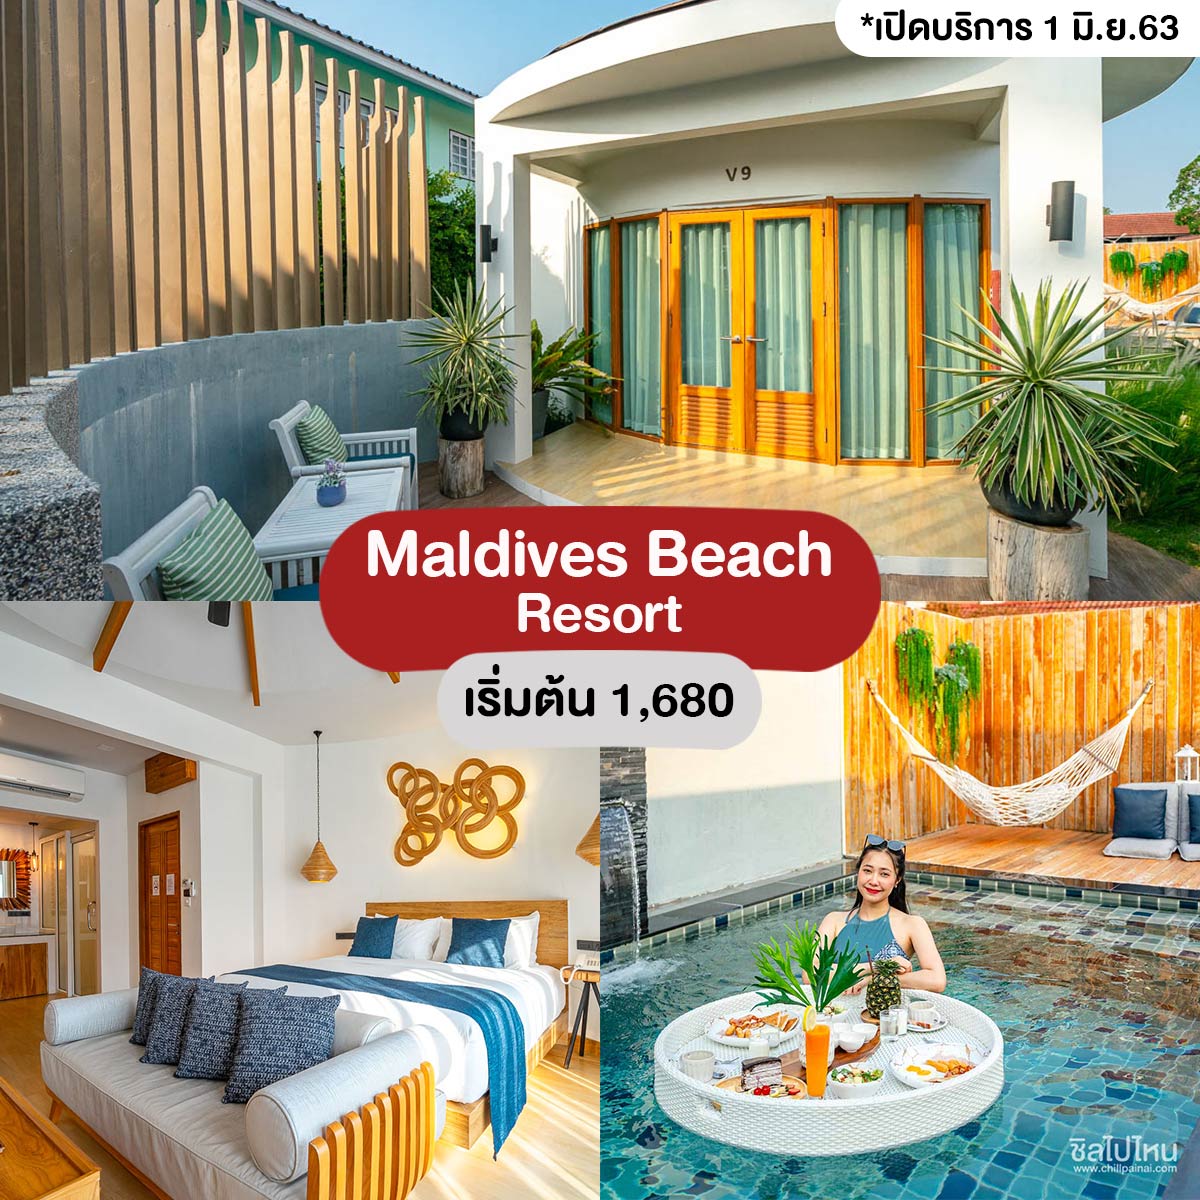 Maldives Beach Resort - ที่พักจันทบุรี